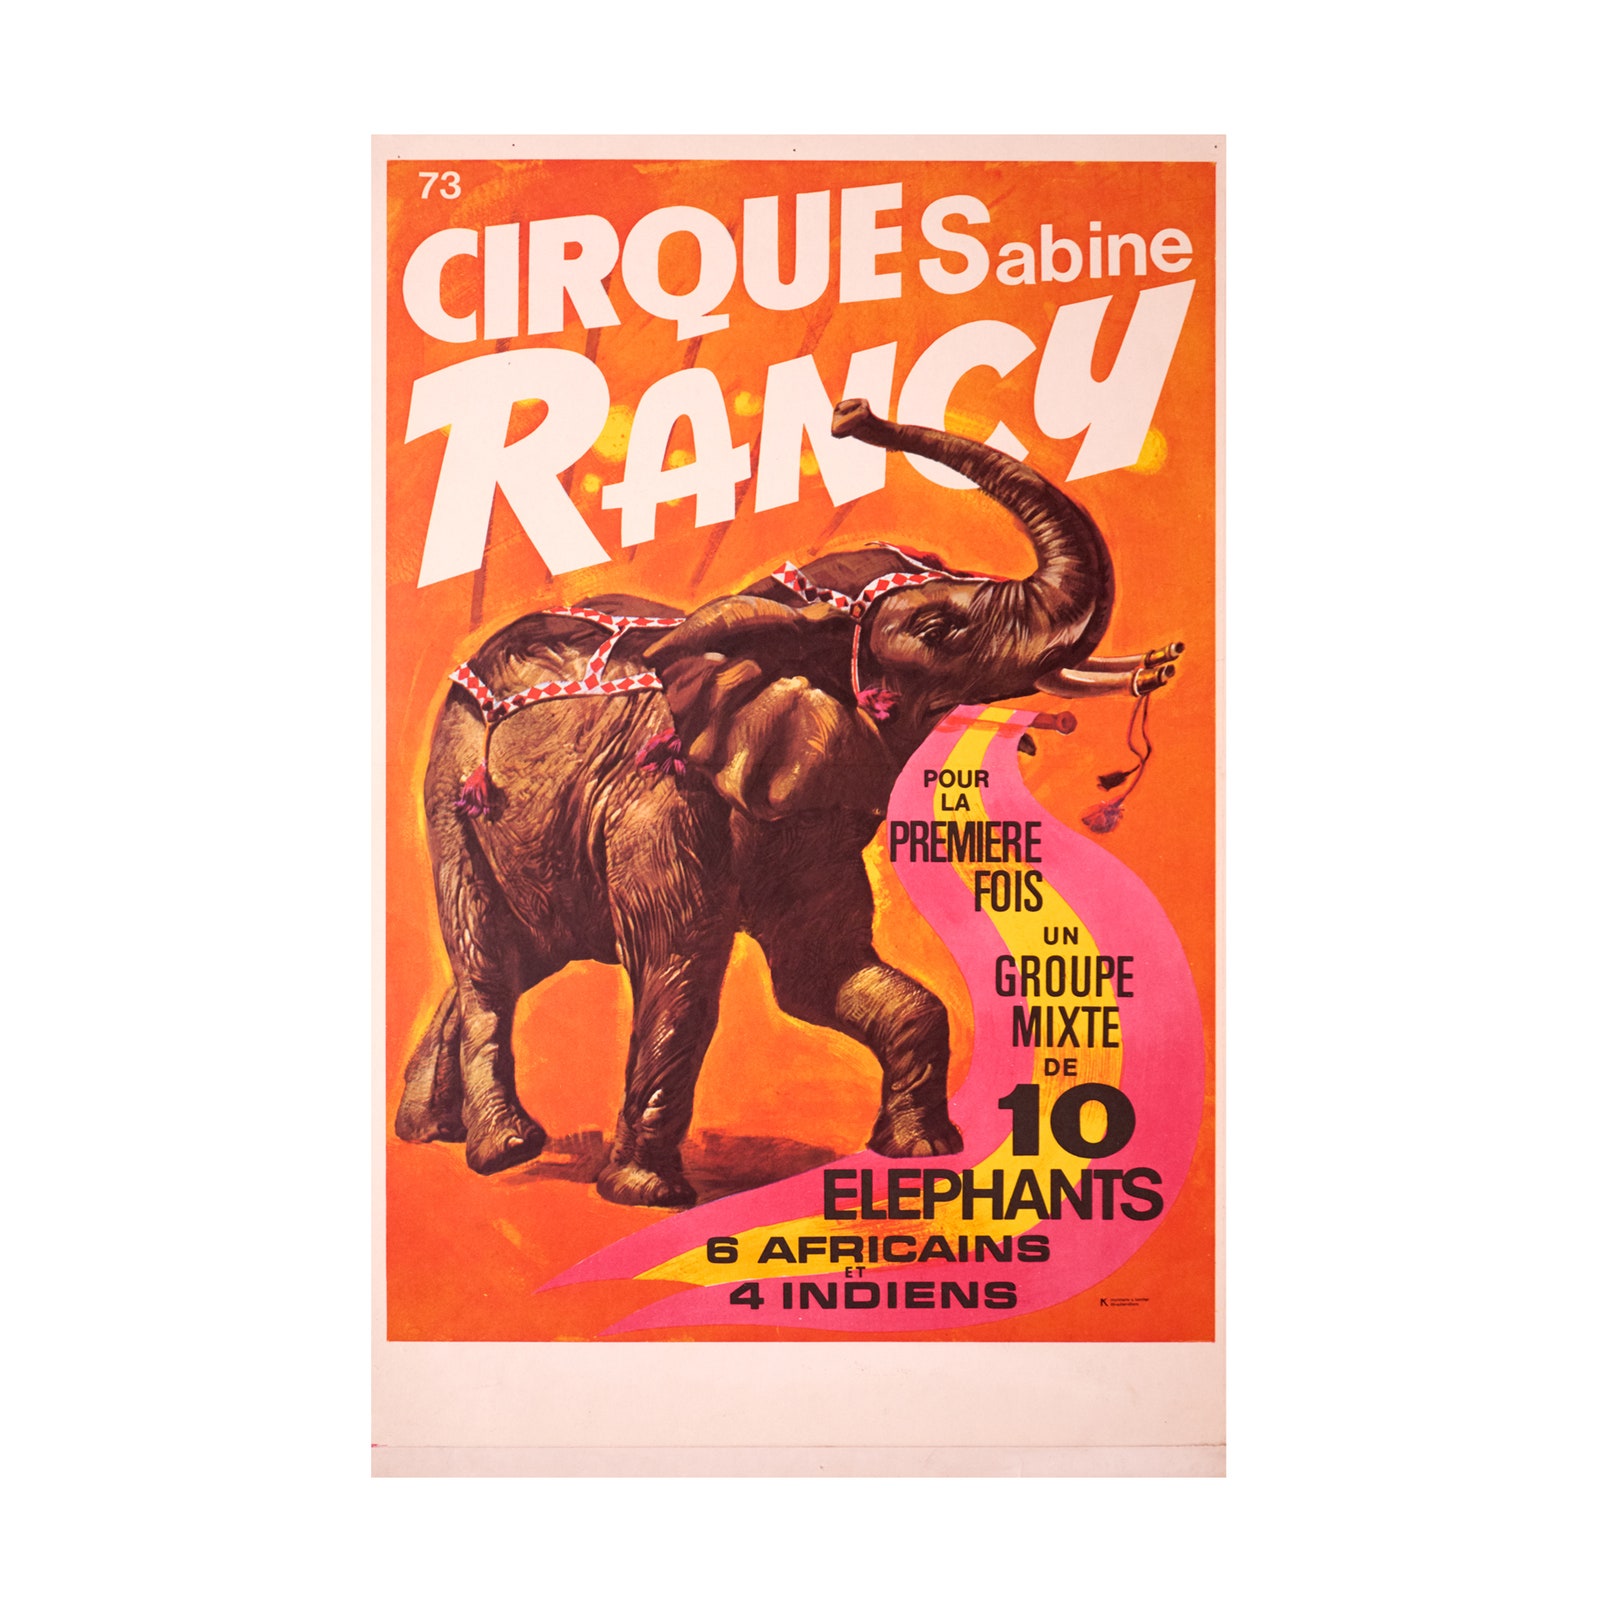 Постер Cirque Sabine Rancy 1973 год из галереи SetisArtSpace.